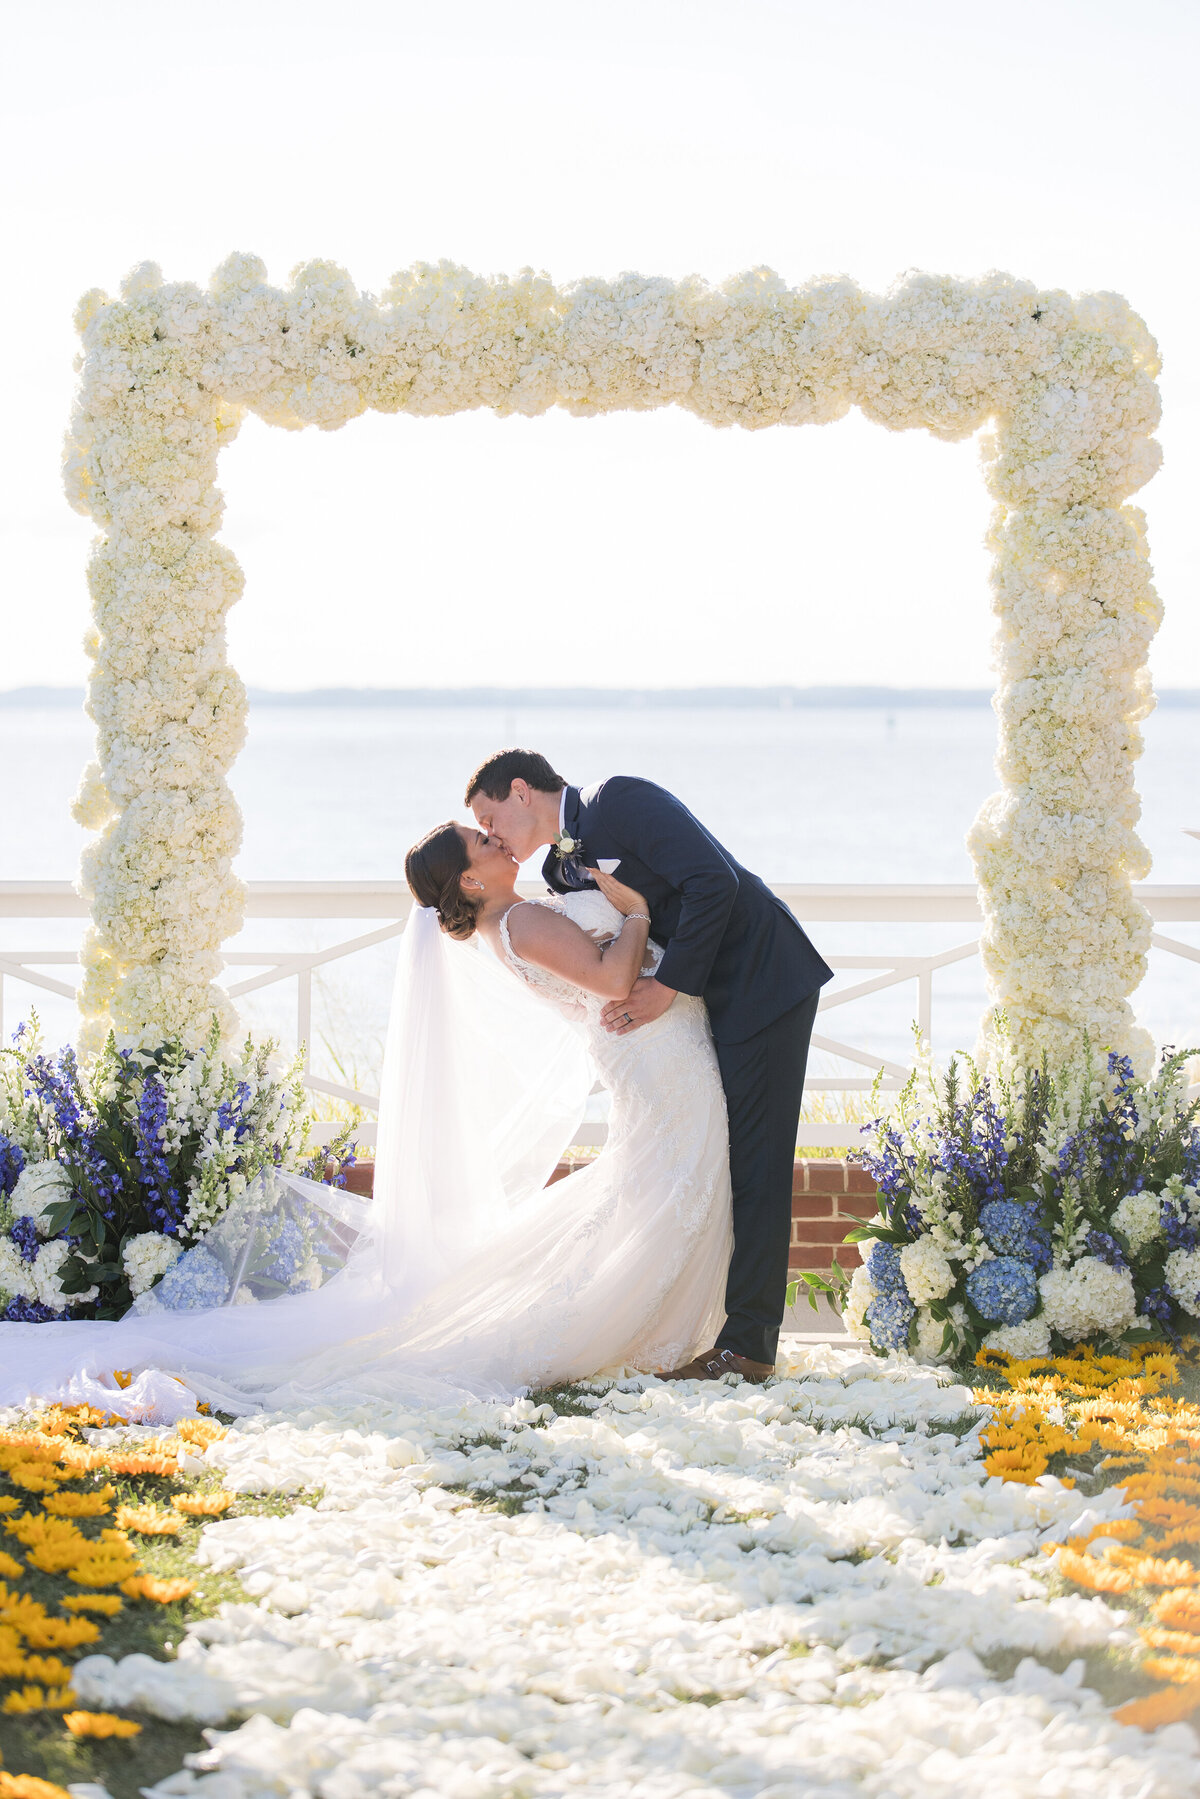 Chesapeake Bay Beach Club wedding ceremony at Beach House Ballroom with floral arch by Christa Rae Photography